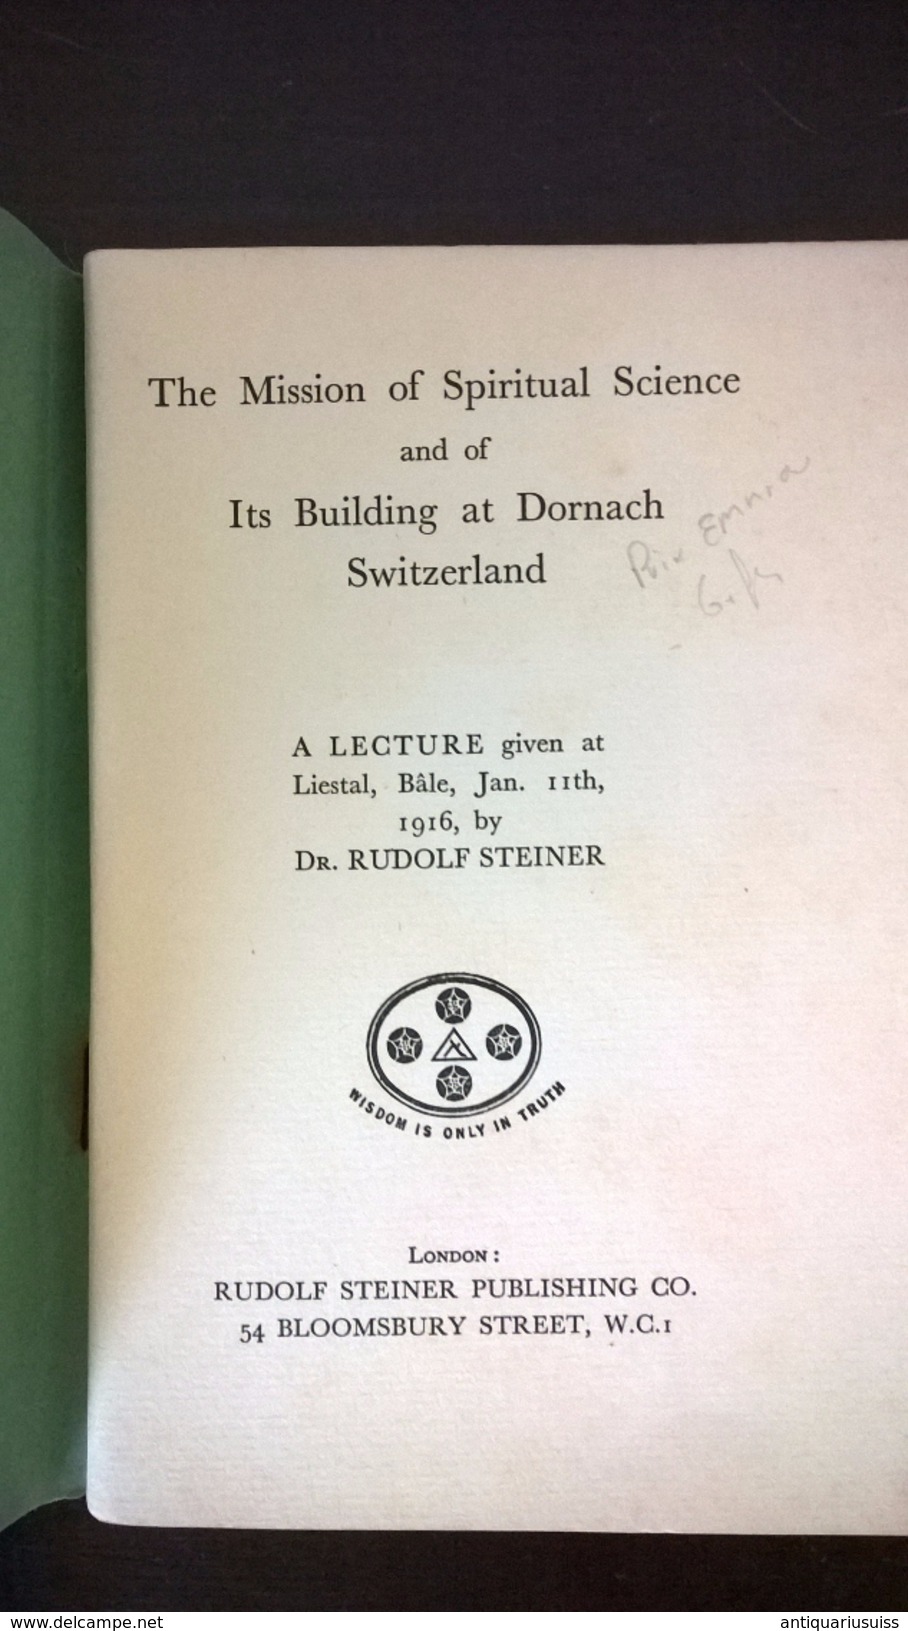 Rudolf Steiner - The Mission of Spiritual Science - 1916